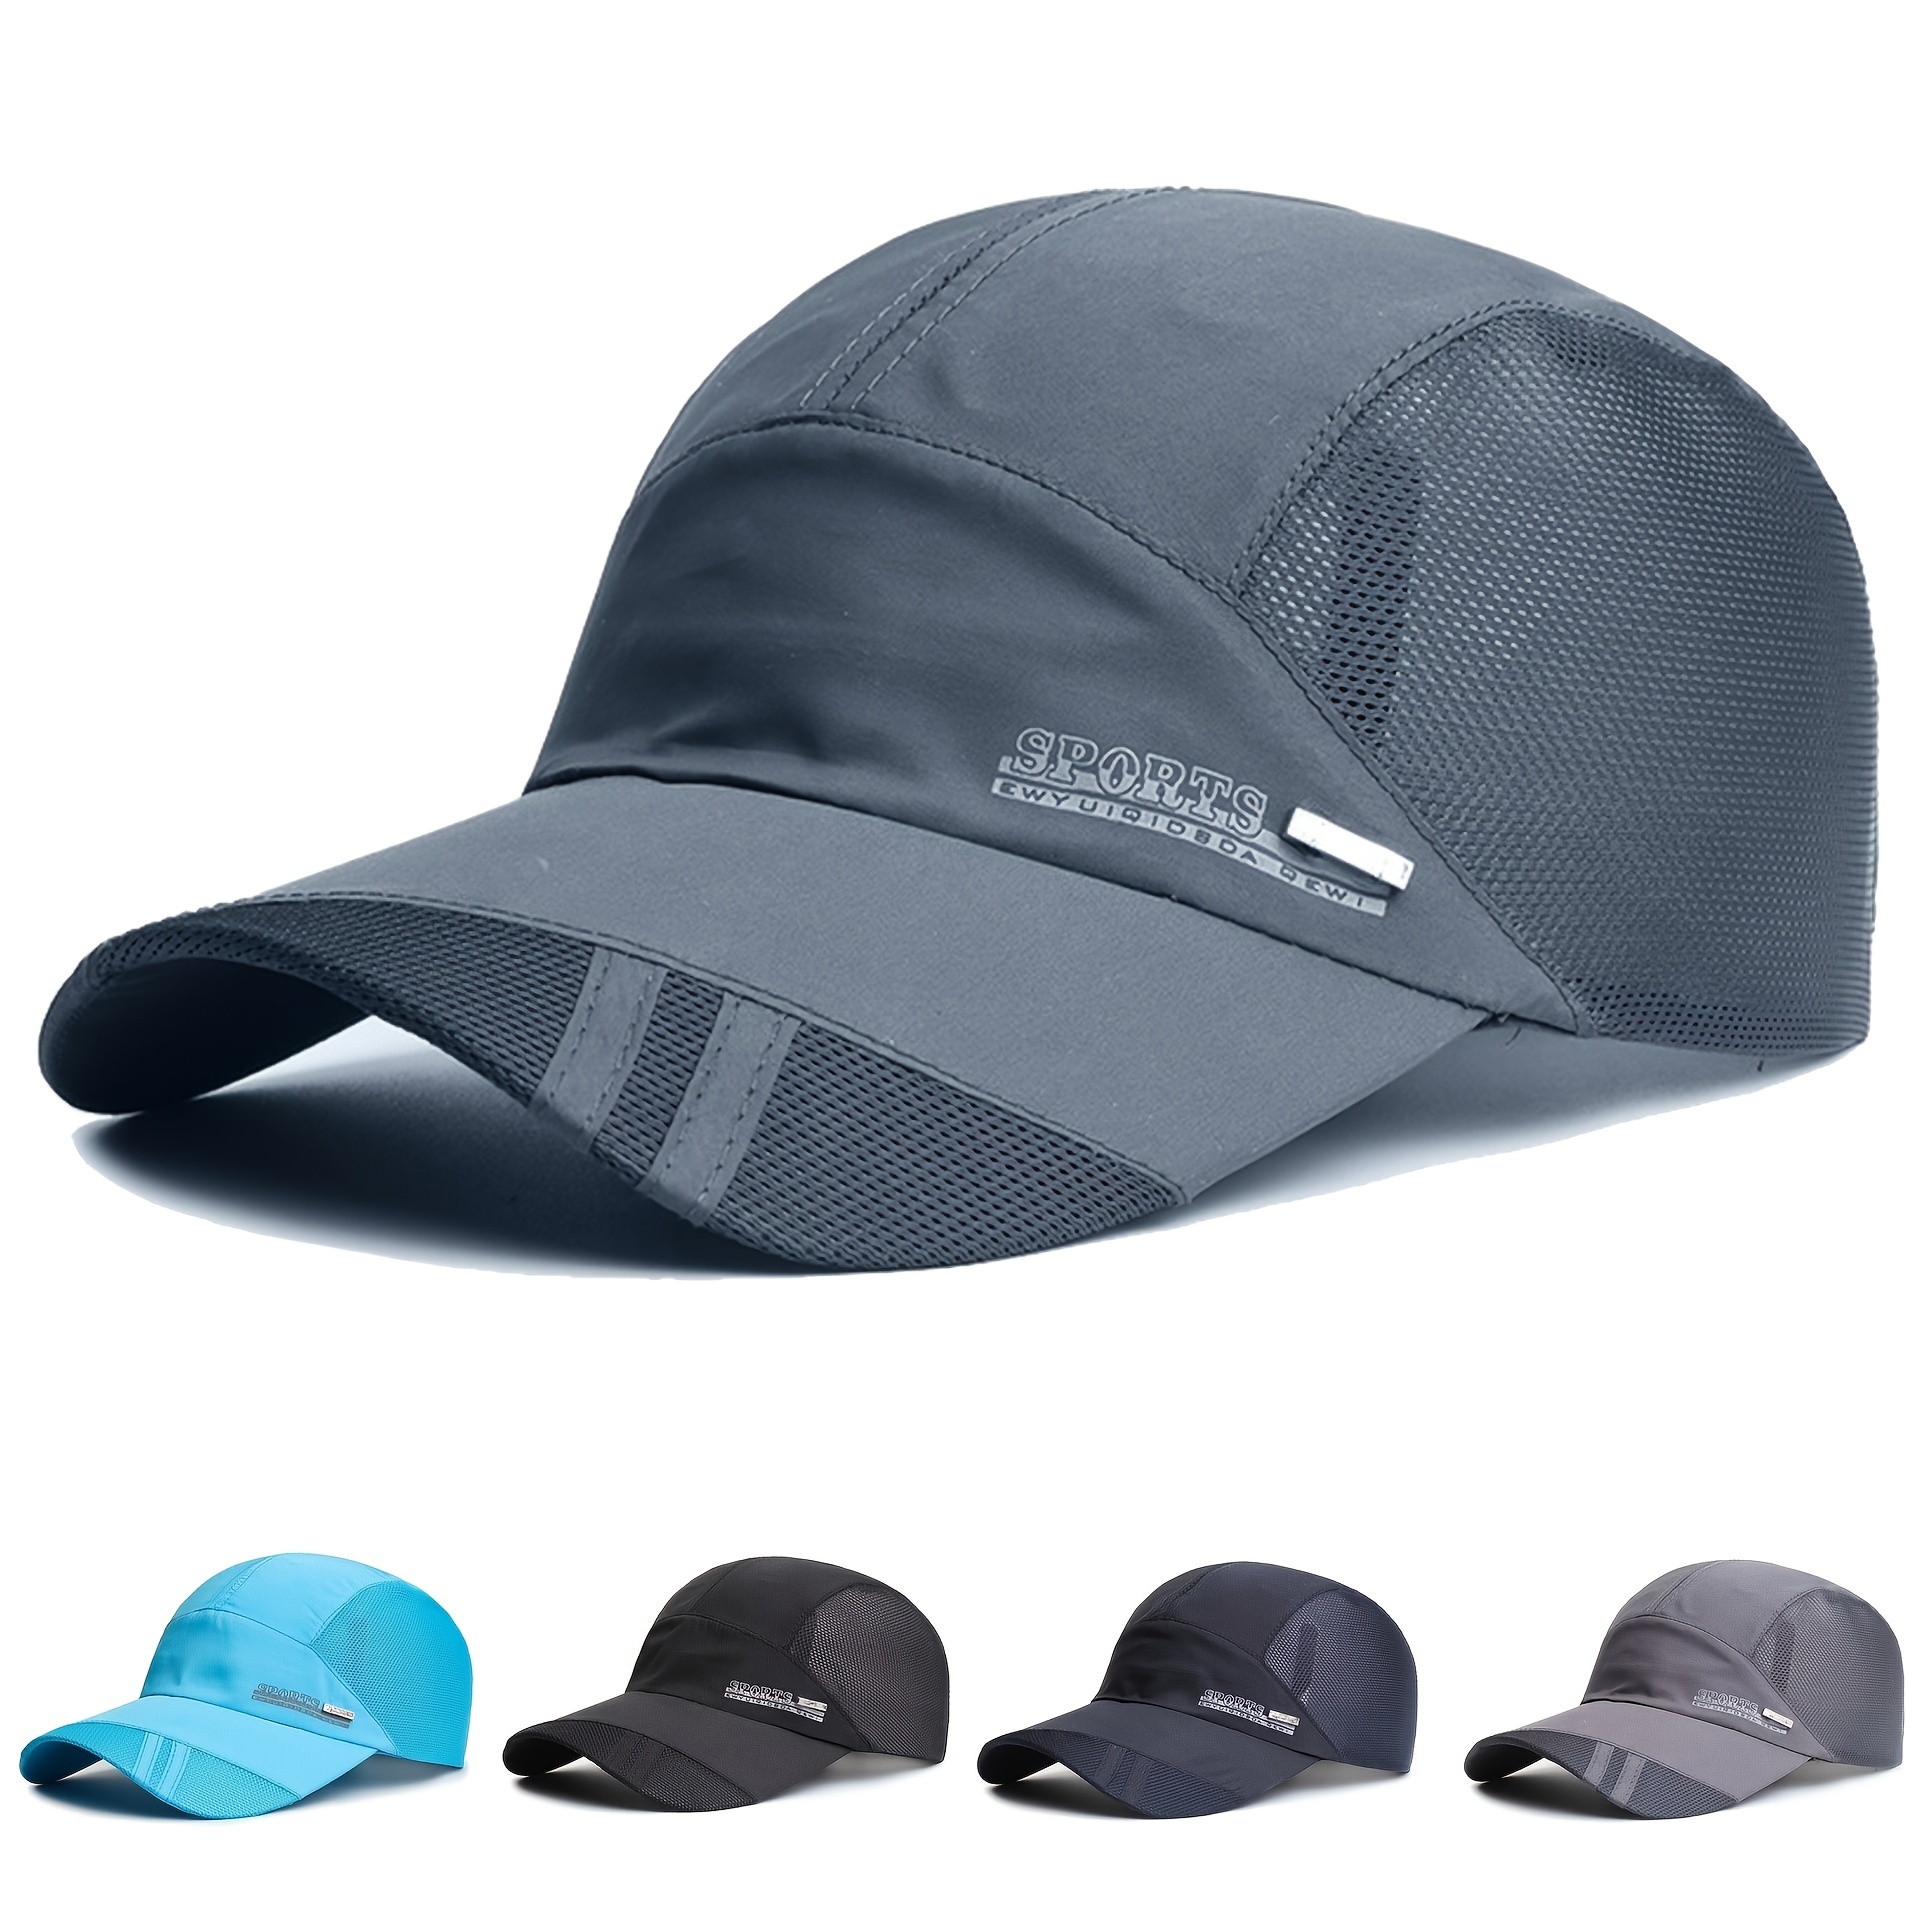 Biinggo 2 Men's Hats Summer Sun Hat Outdoor Sun Hat Ball Cap Breathable Mesh Cap Other